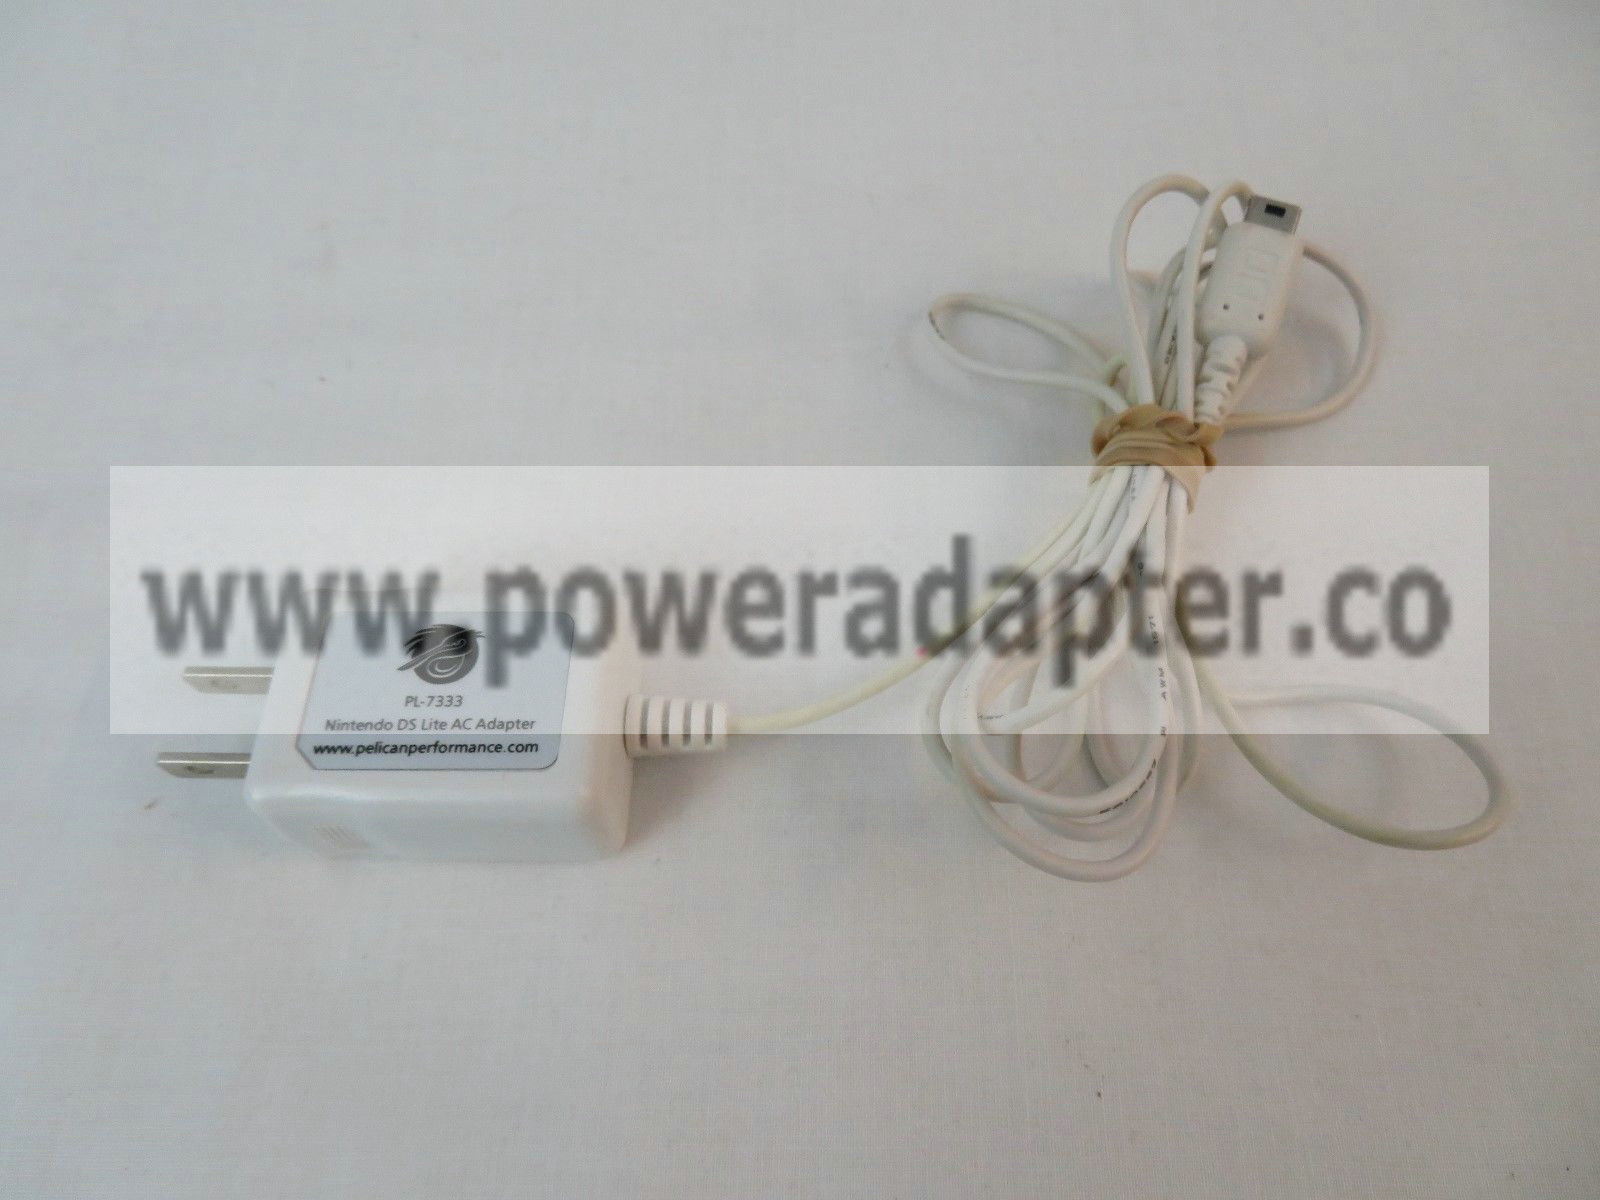 AC/DC Power Adapter Model GFP051U-0505B Input 100-240V 60Hz 0.2A Output 5V 0.5A DC Brand: SWITCHING ADAPTOR Model